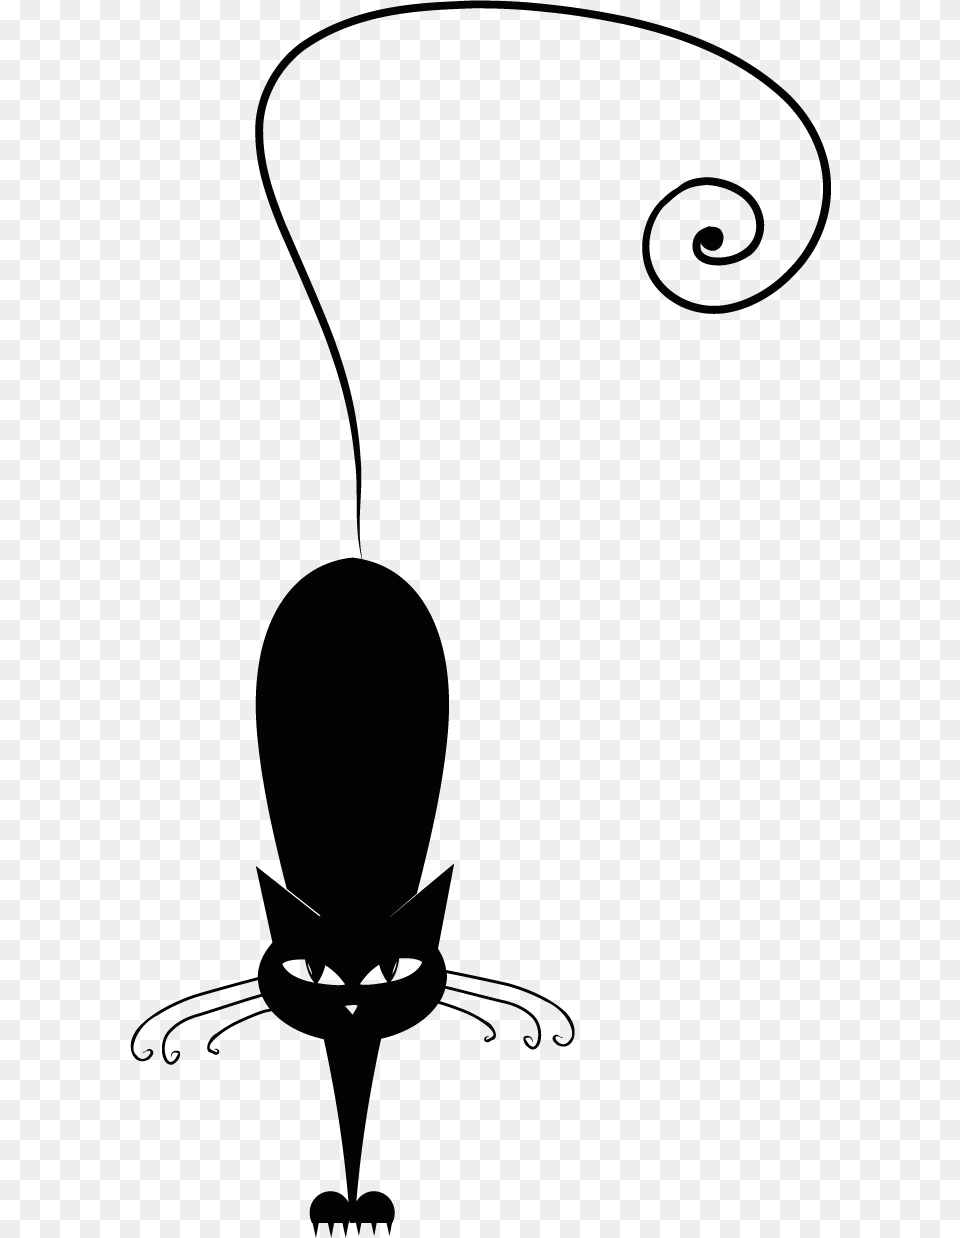 Black Cat Silhouette Silhouette Images Silhouette Black Cat Silhouette, Stencil Png Image